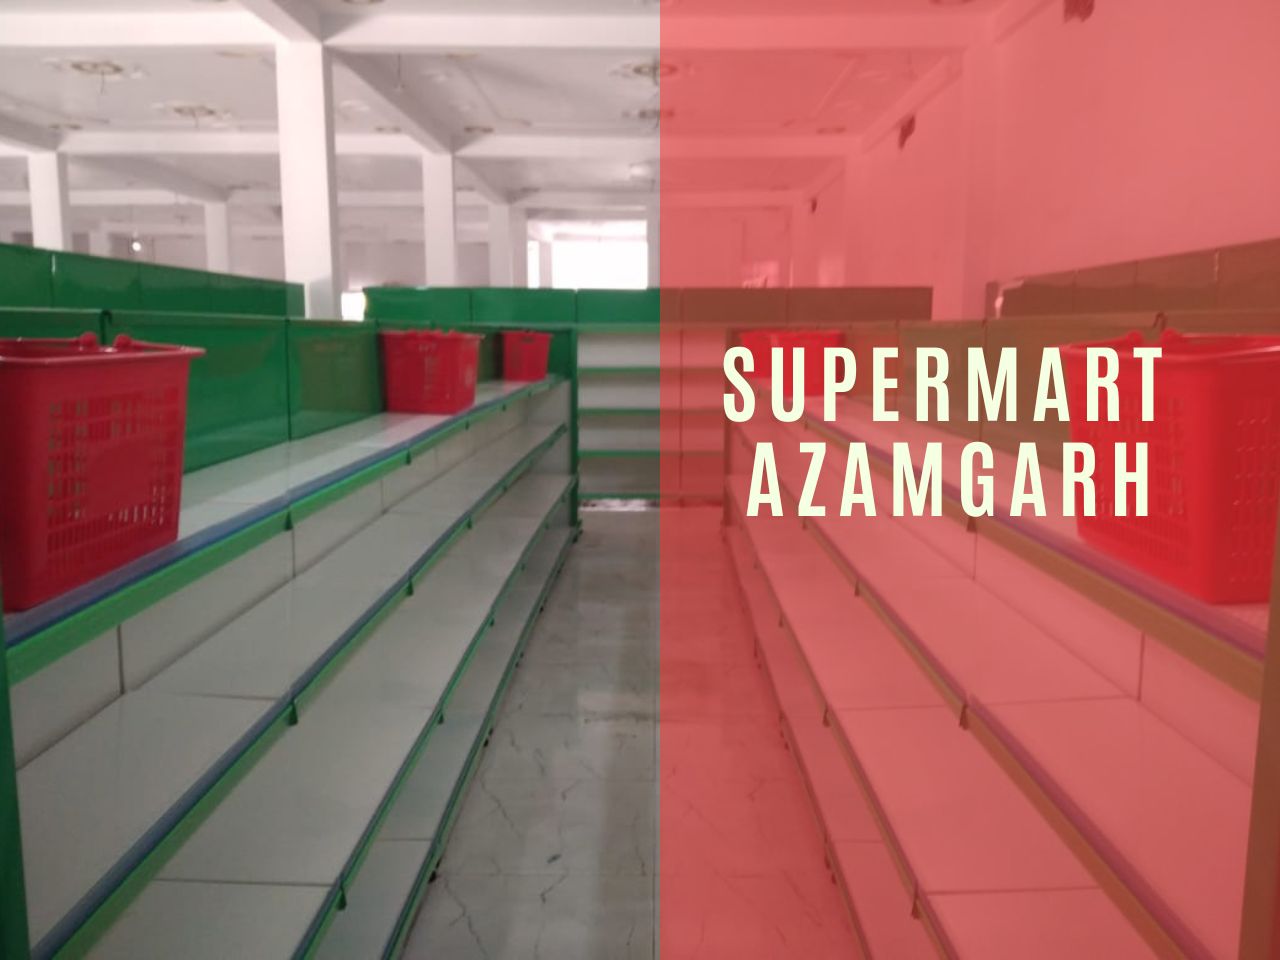 Supermart   Azamgarh.jpg